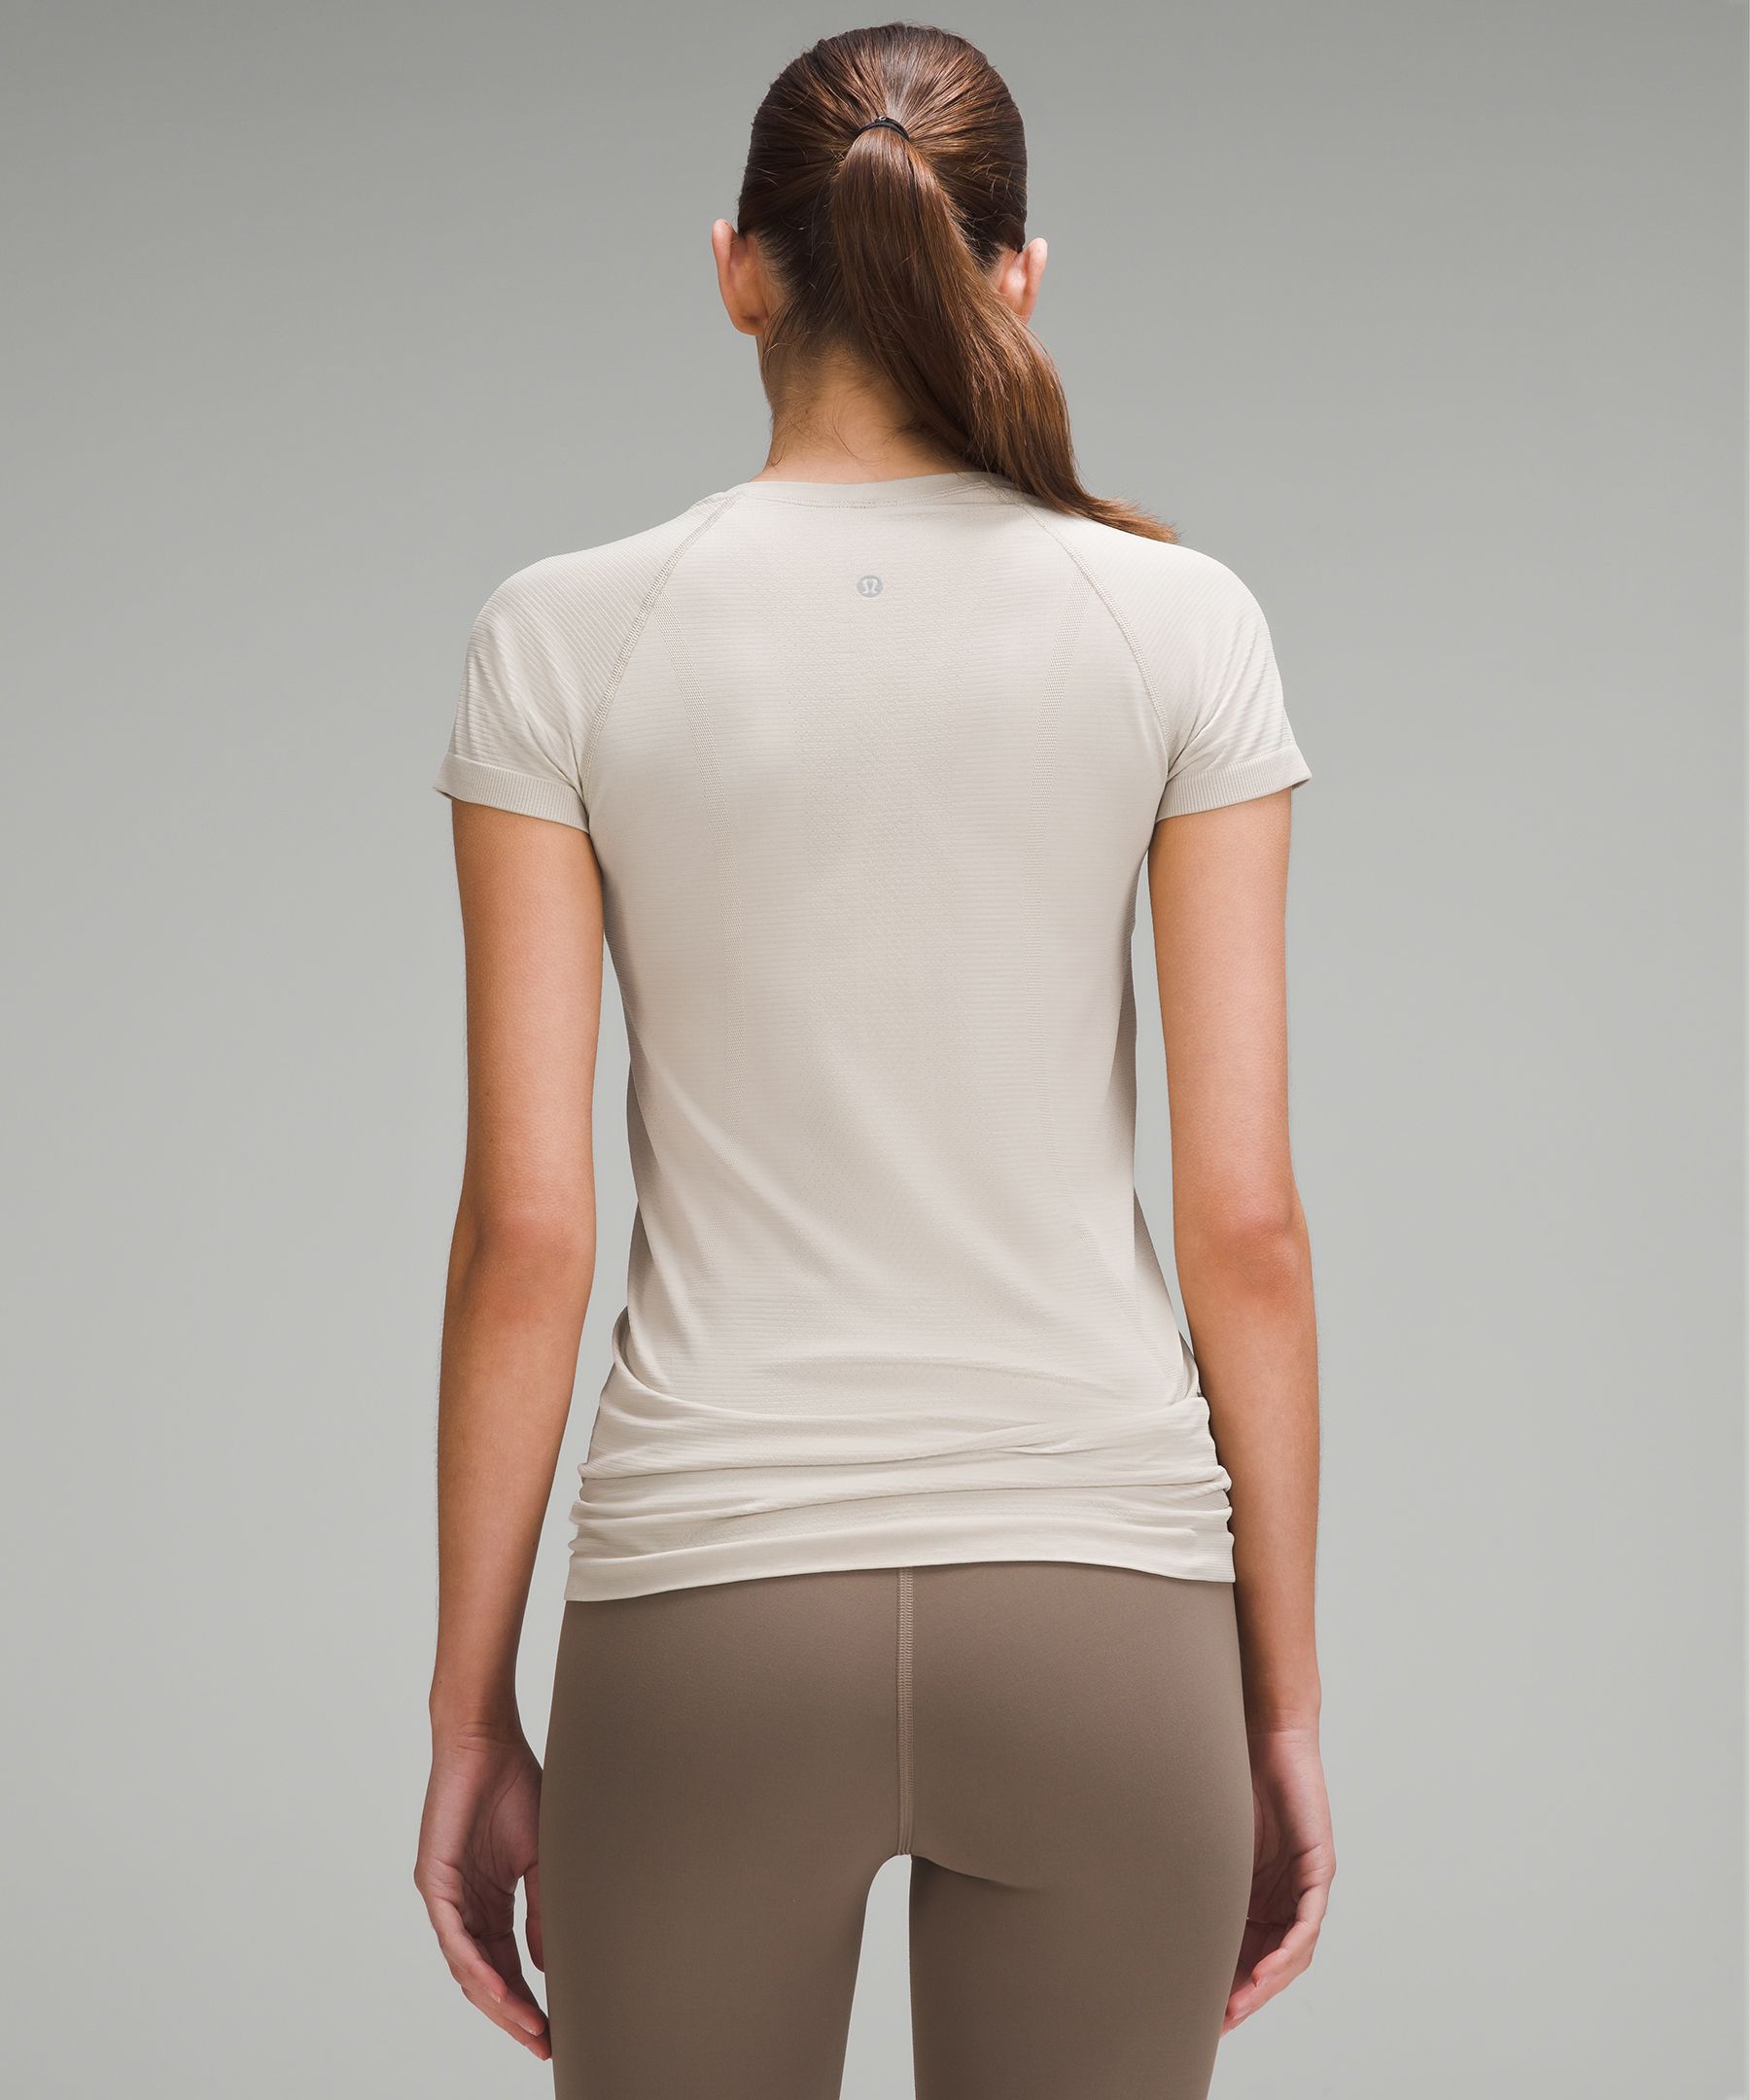 Lululemon Swiftly Tech Short Sleeve Women 10 Yoga Sport White